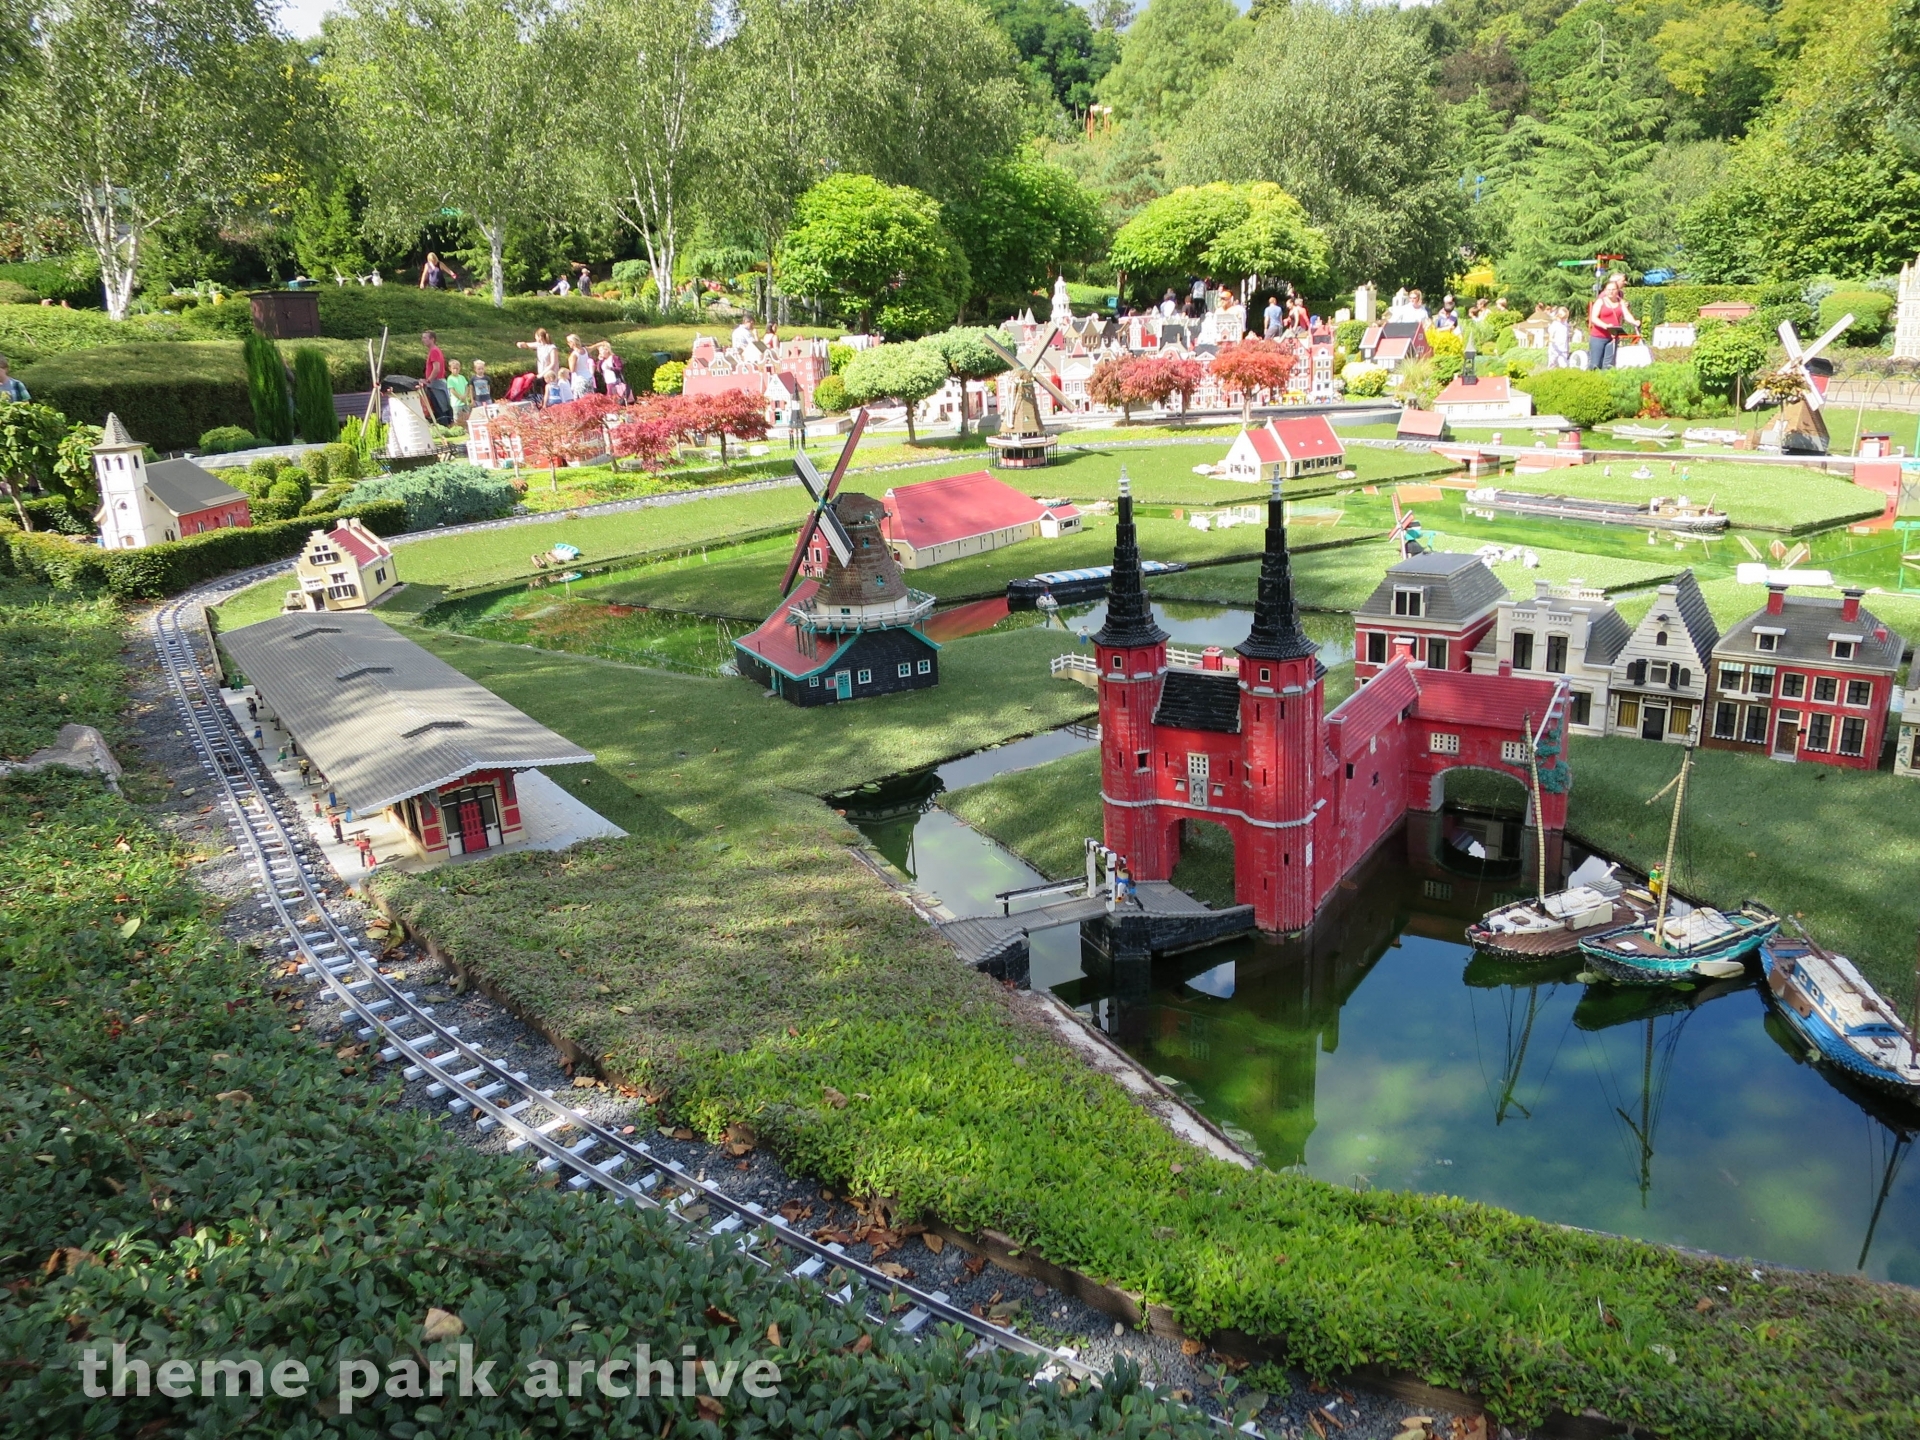 Miniland at LEGOLAND Windsor | Theme Park Archive